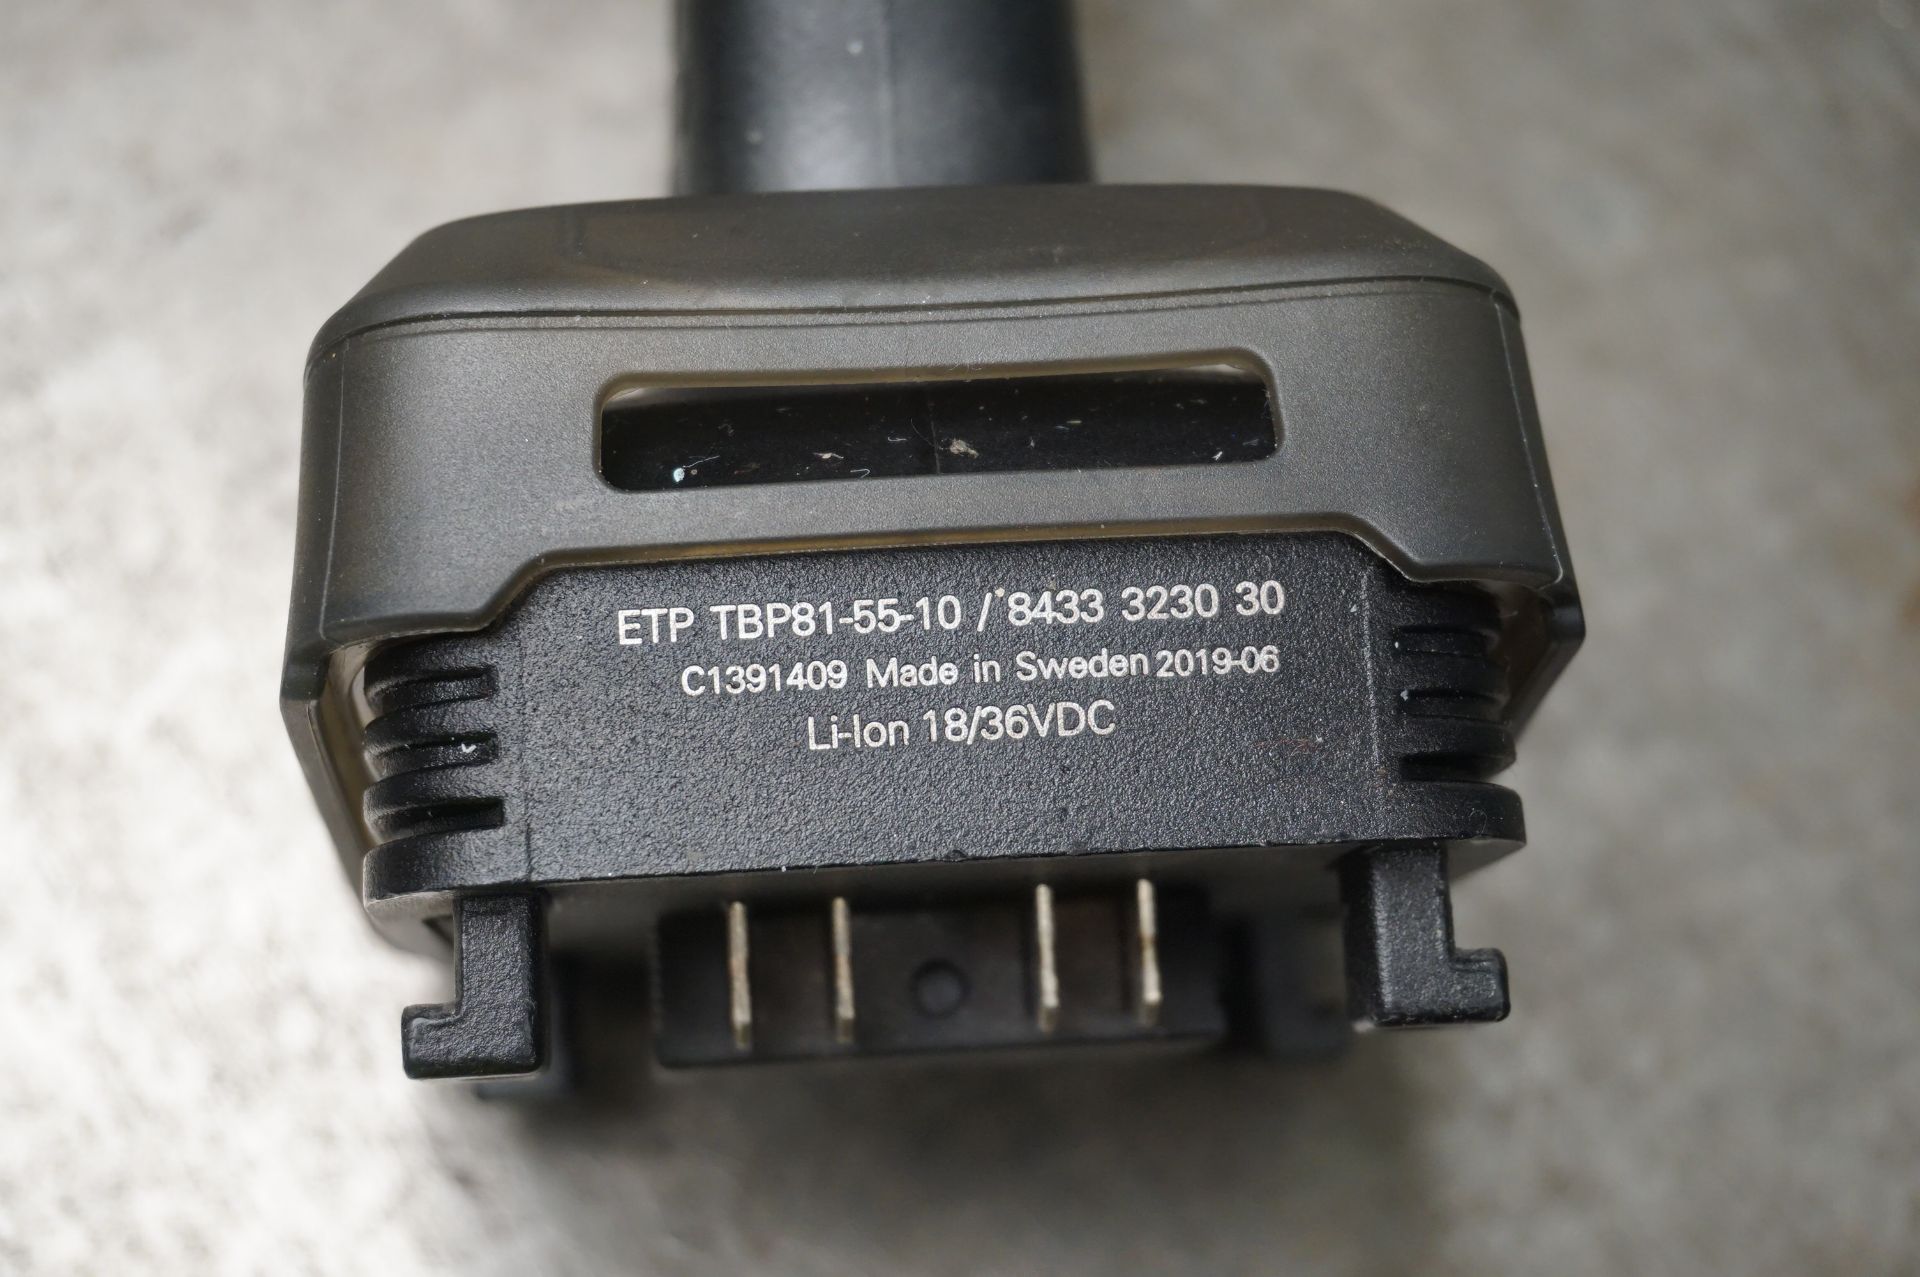 1 x Atlas Copco ETV STR31-10-10 transducerized nutrunner with 1 x Atlas Copco ETP TBP81-55-10, cordl - Image 4 of 6